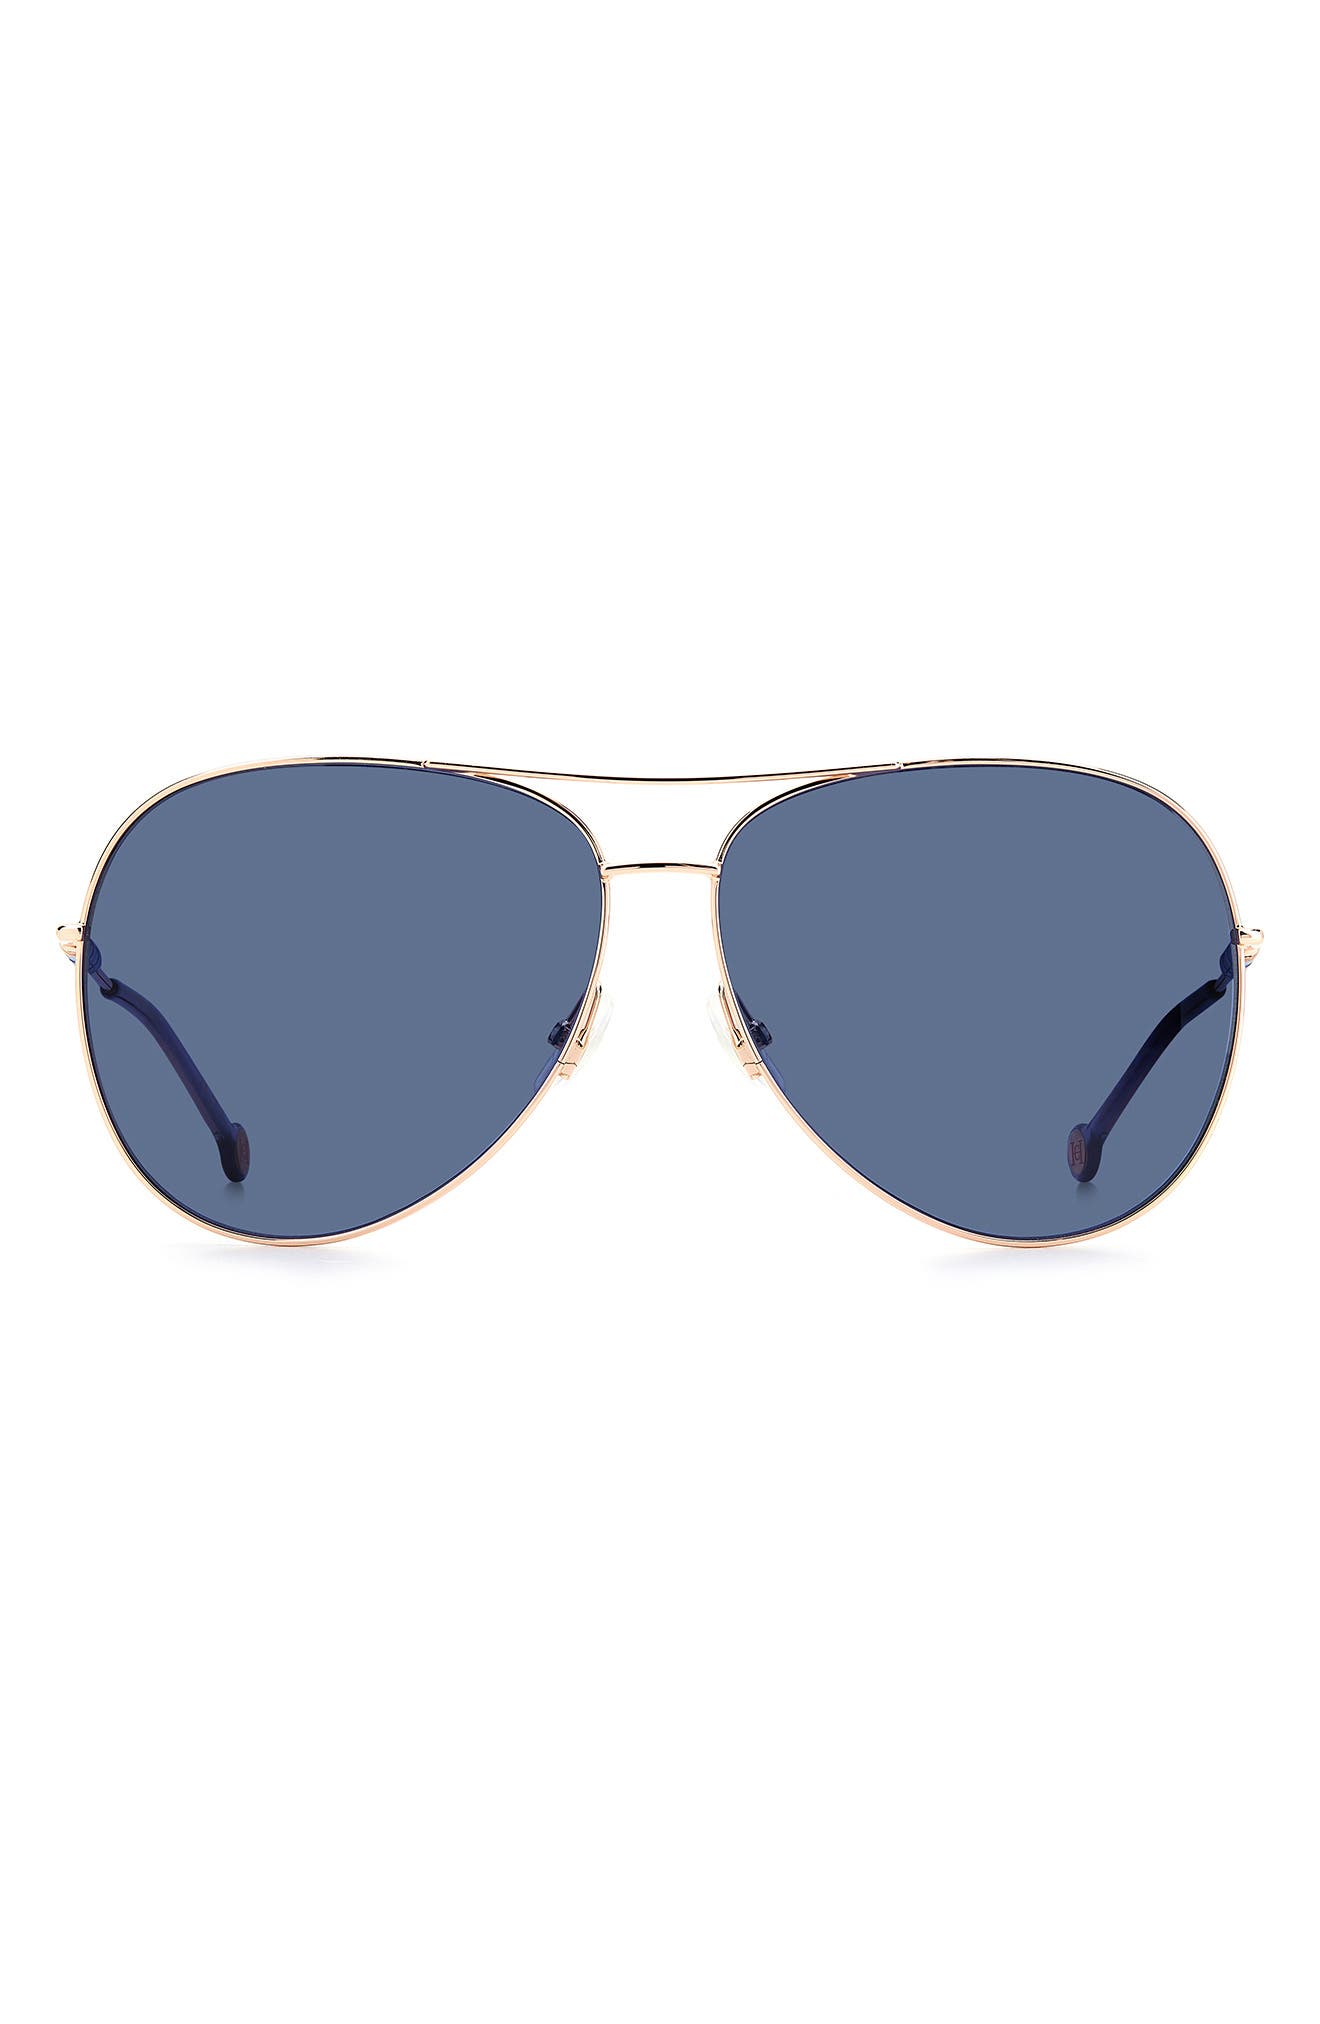 Carolina Herrera 64mm Aviator Sunglasses in Gold Copper /Blue at Nordstrom